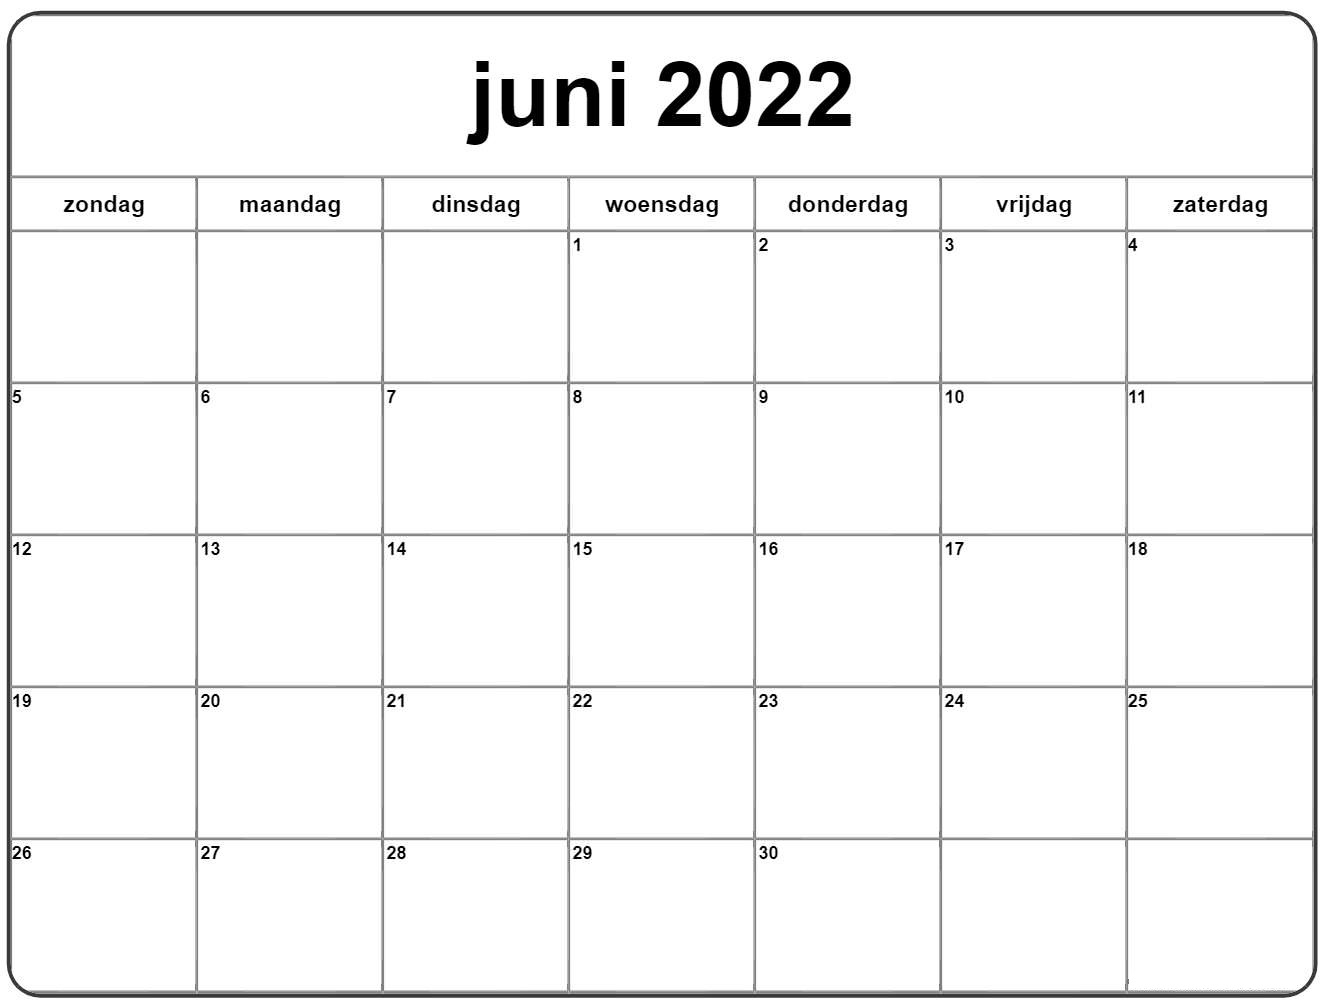 Kalender Juni 2022